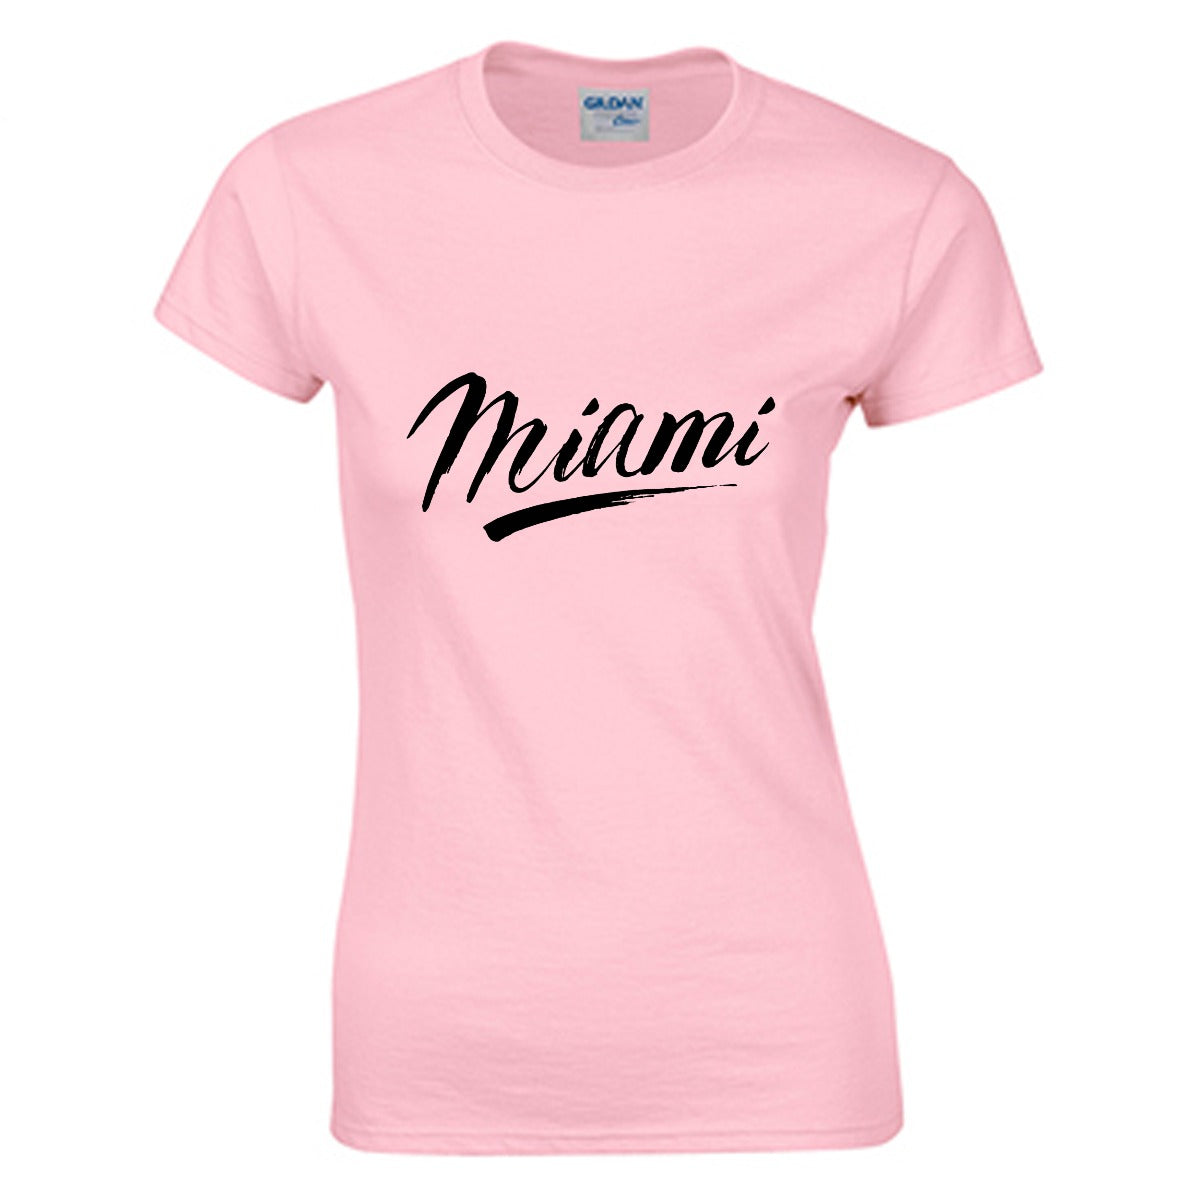 Miami Women's T-shirt (100% Cotton) - T0369